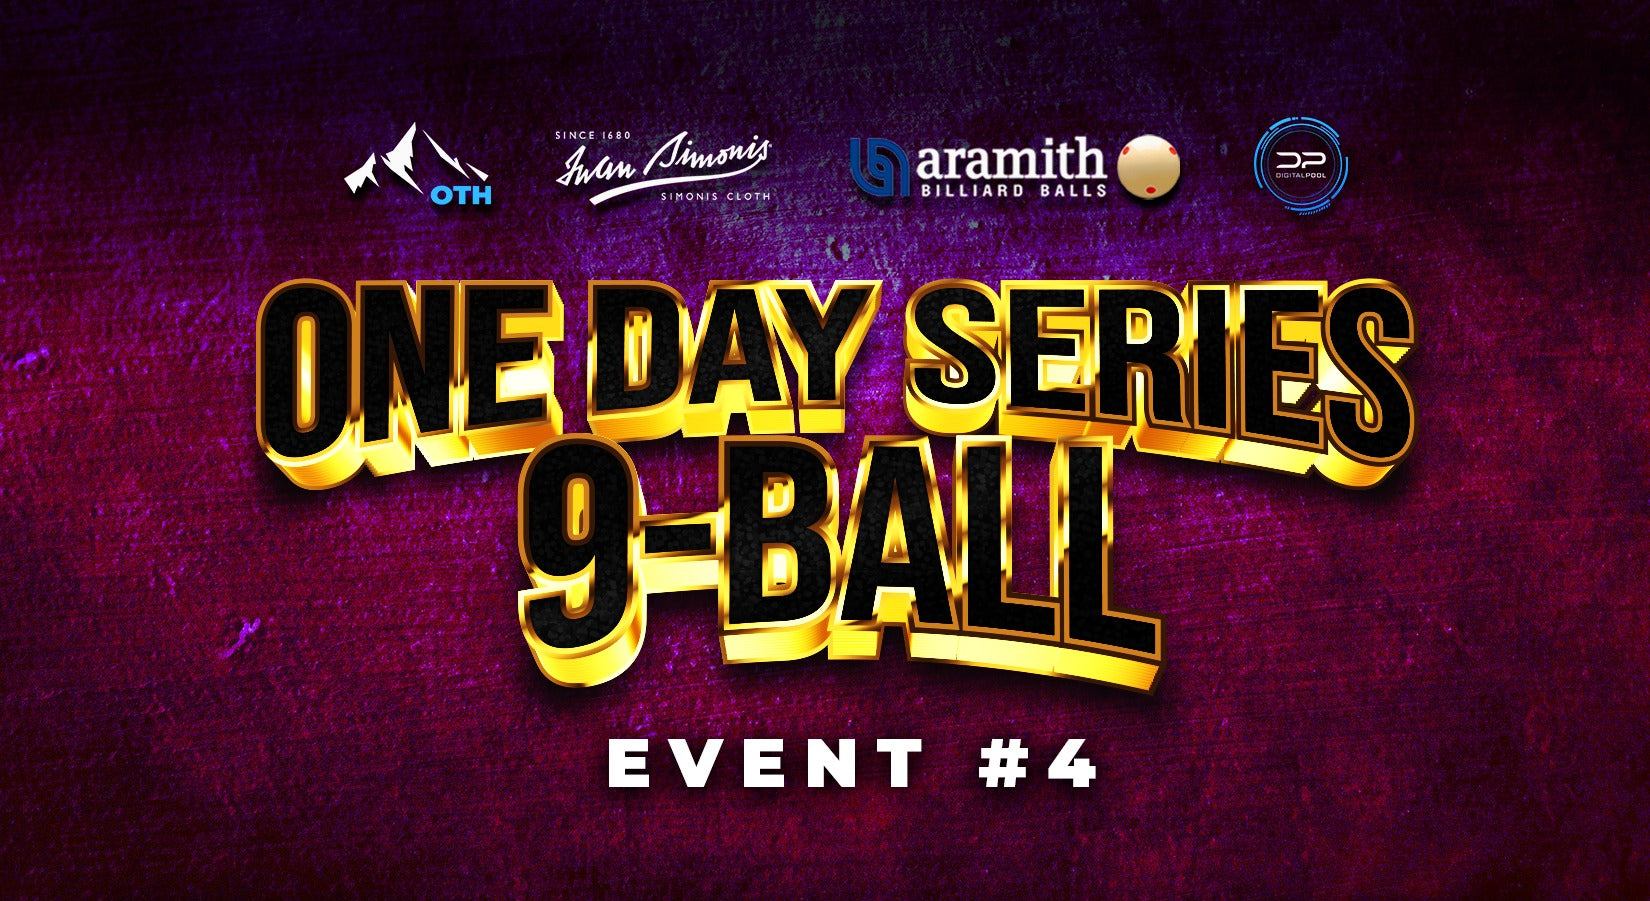 Jun 29 - One Day Open 9-Ball Series Event #4